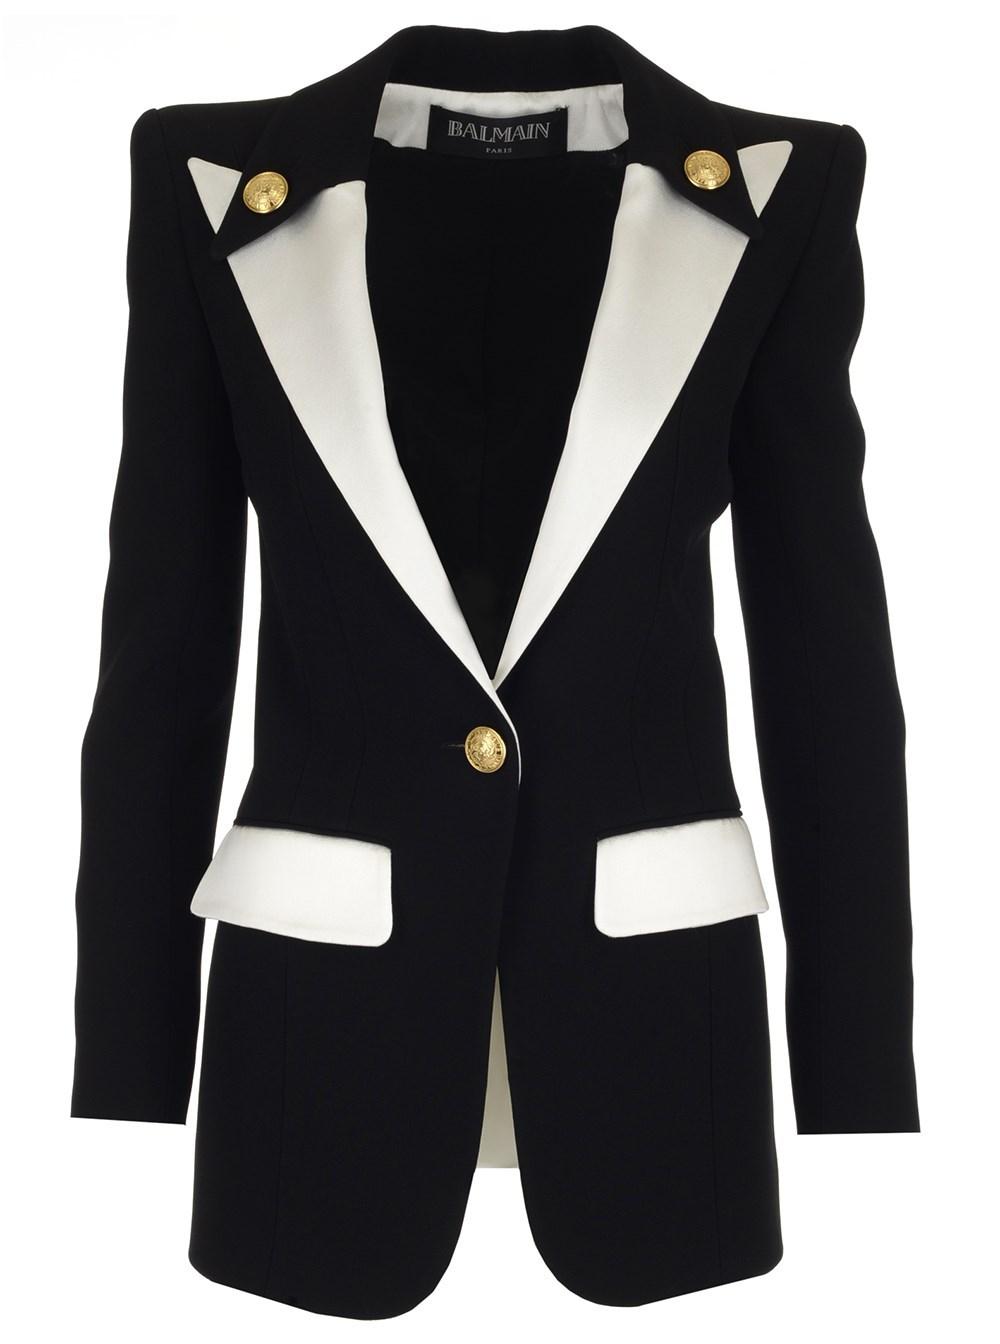 Balmain Synthetic Colorblocked Satin-lapel Long Blazer Jacket in Black/White  (Black) - Lyst